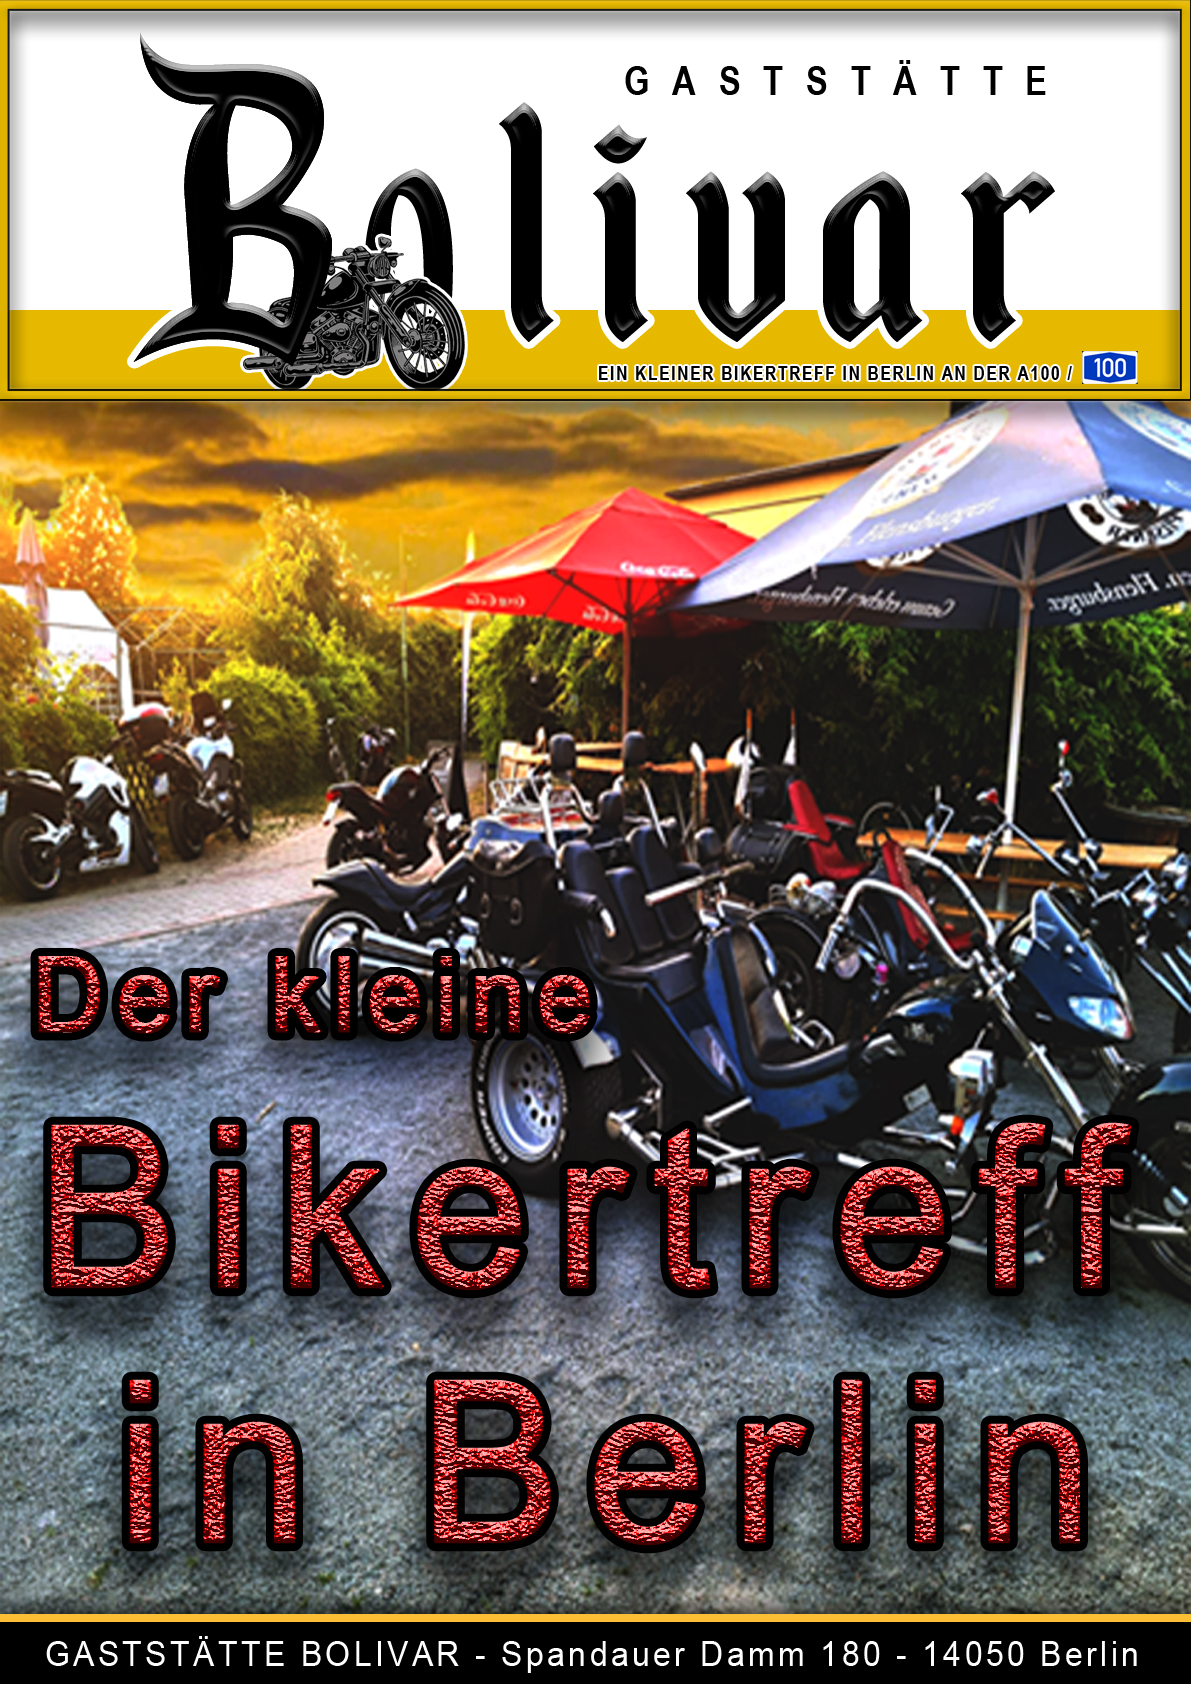 bolivar-berlin-biker-bikerin-treff-a100-avus-treffpunkt-biergarten-imbiss-gaststaette-lokal-kaffee-02